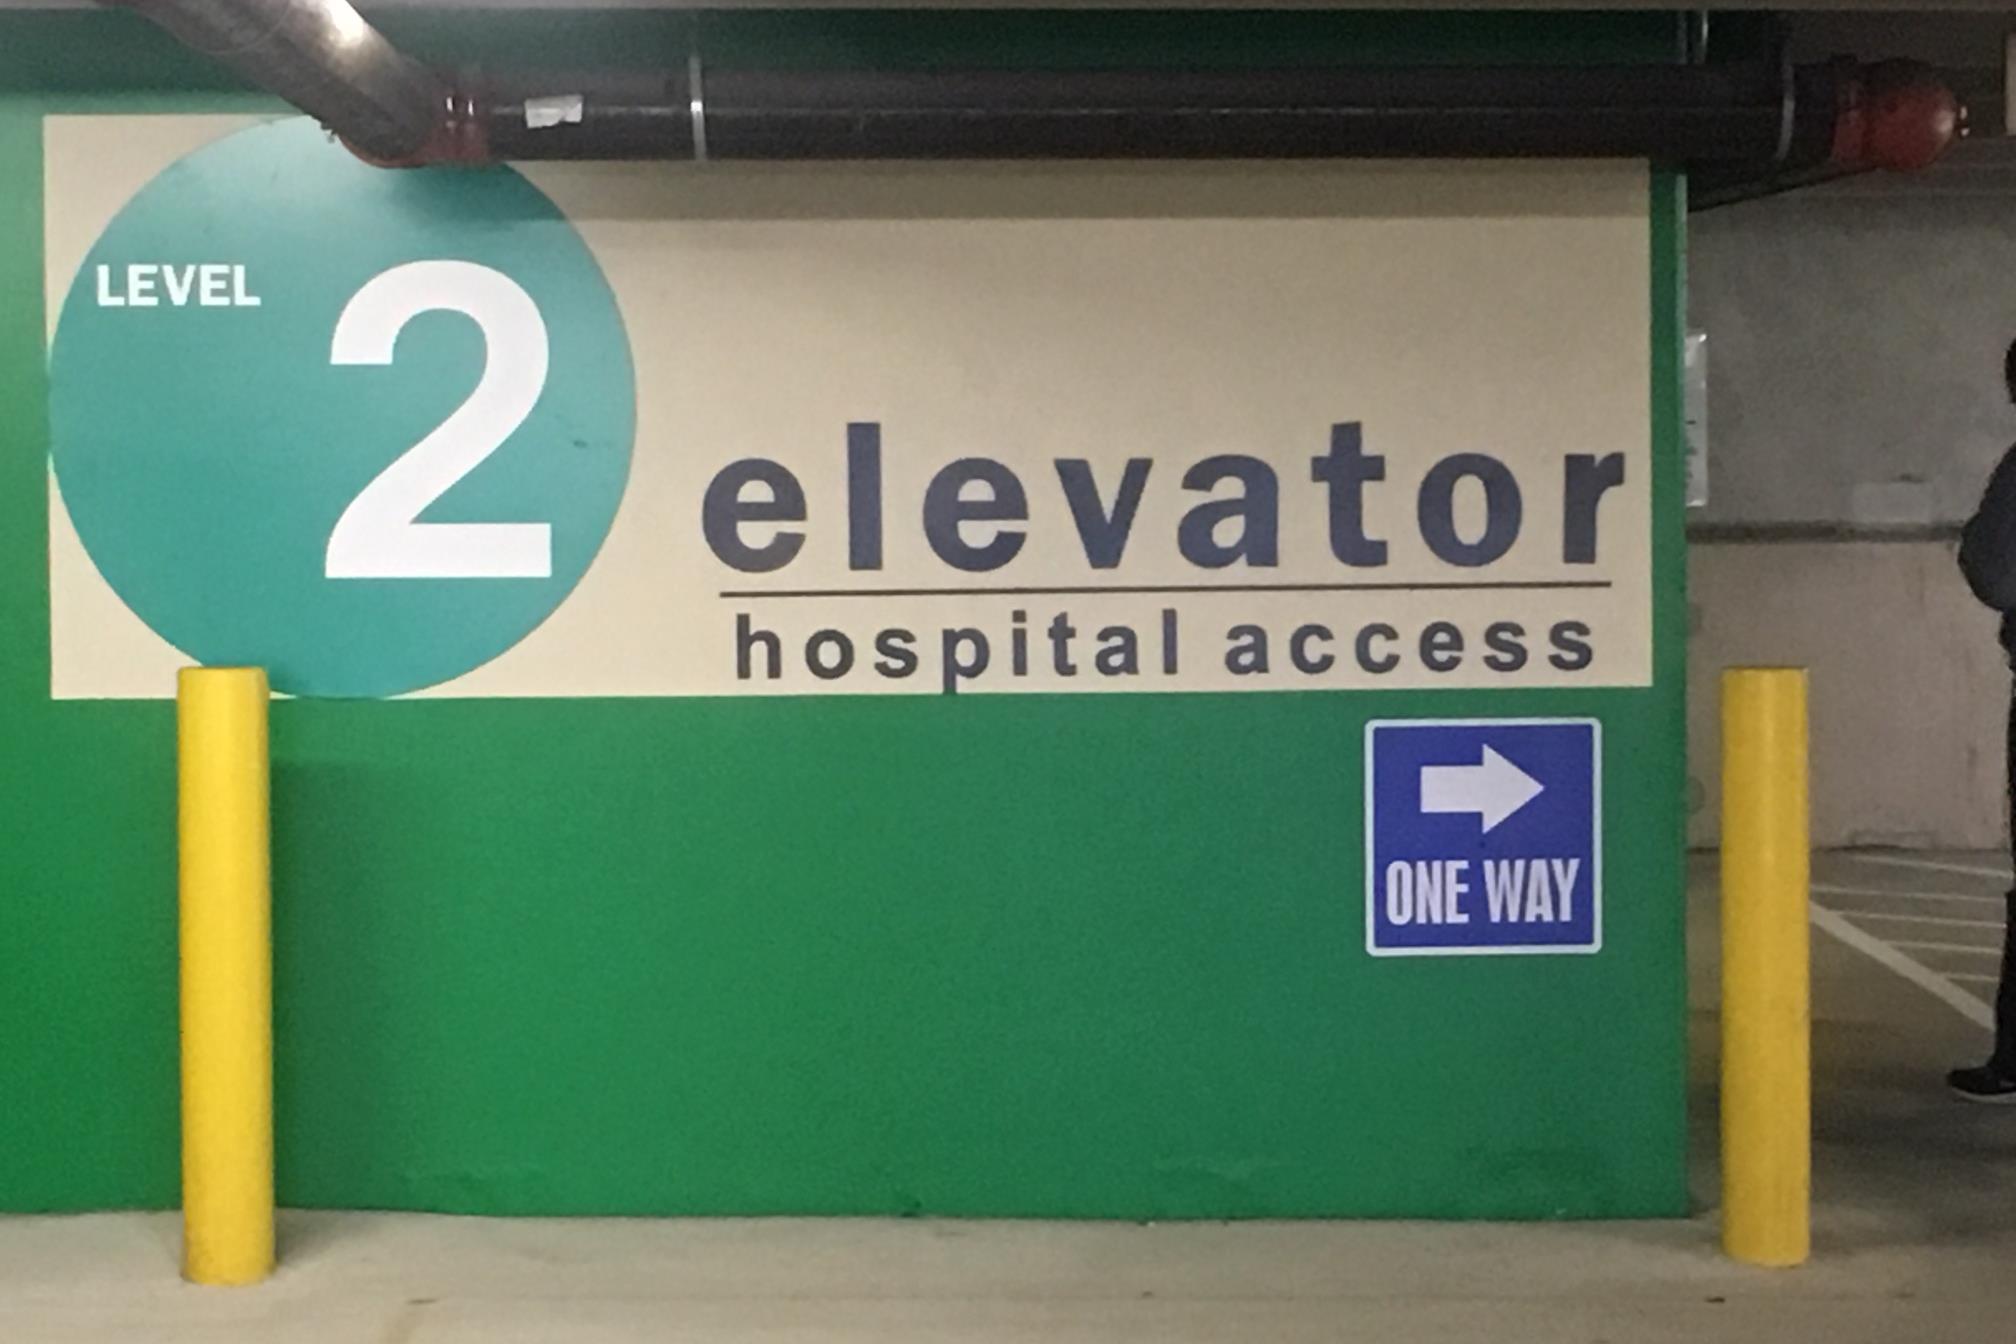 Garage elevators are located on each floor